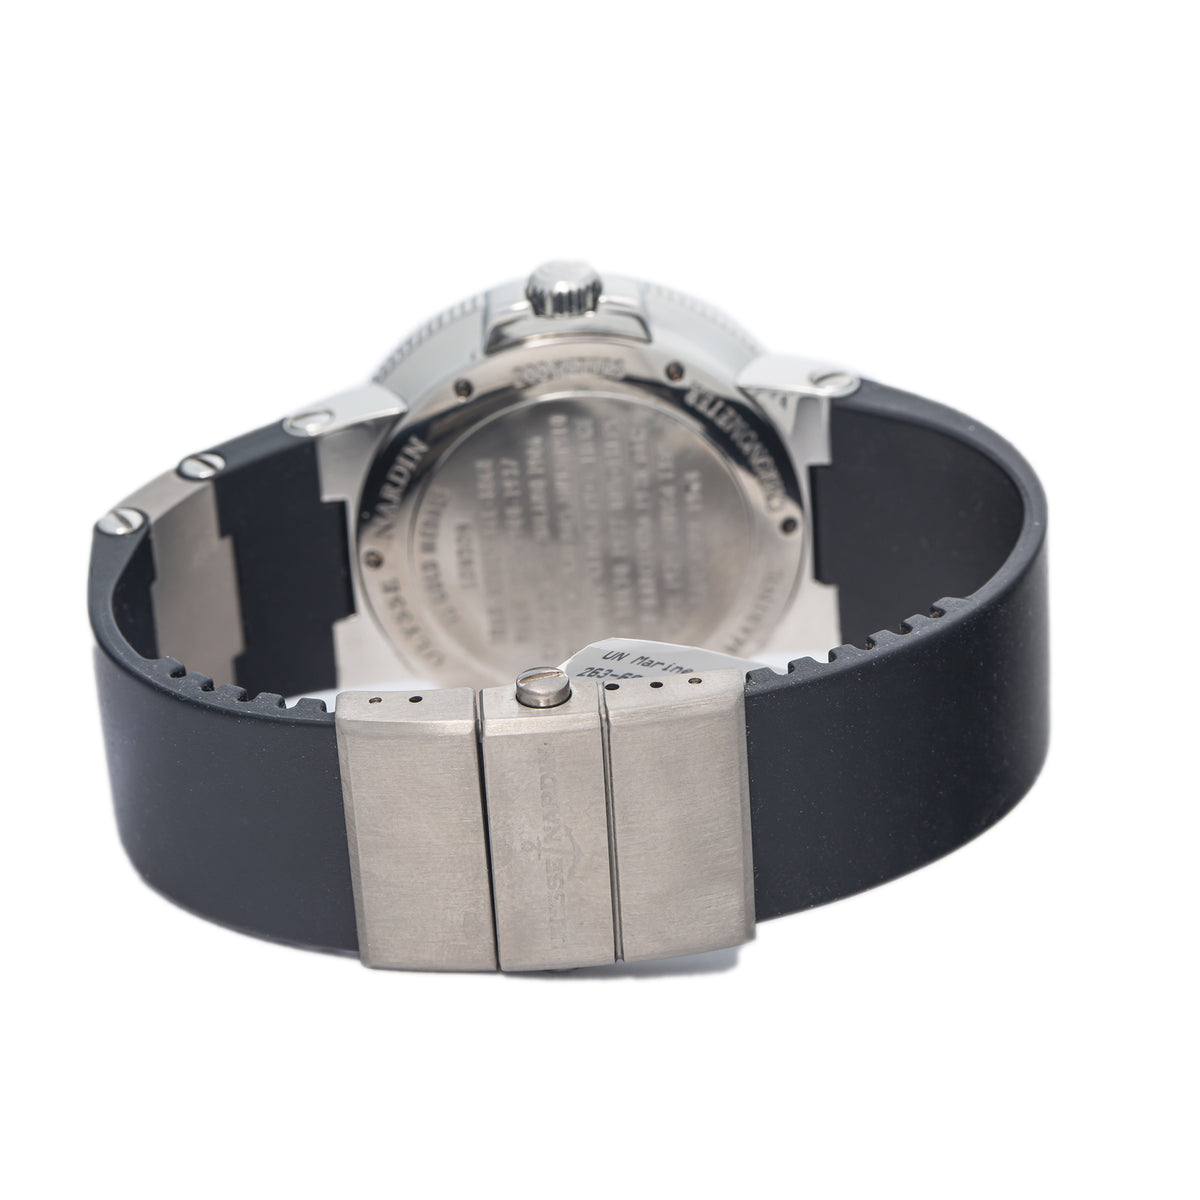 Ulysse Nardin Maxi Marine Chronometer 263-66 Steel Black Dial Auto Watch 41mm